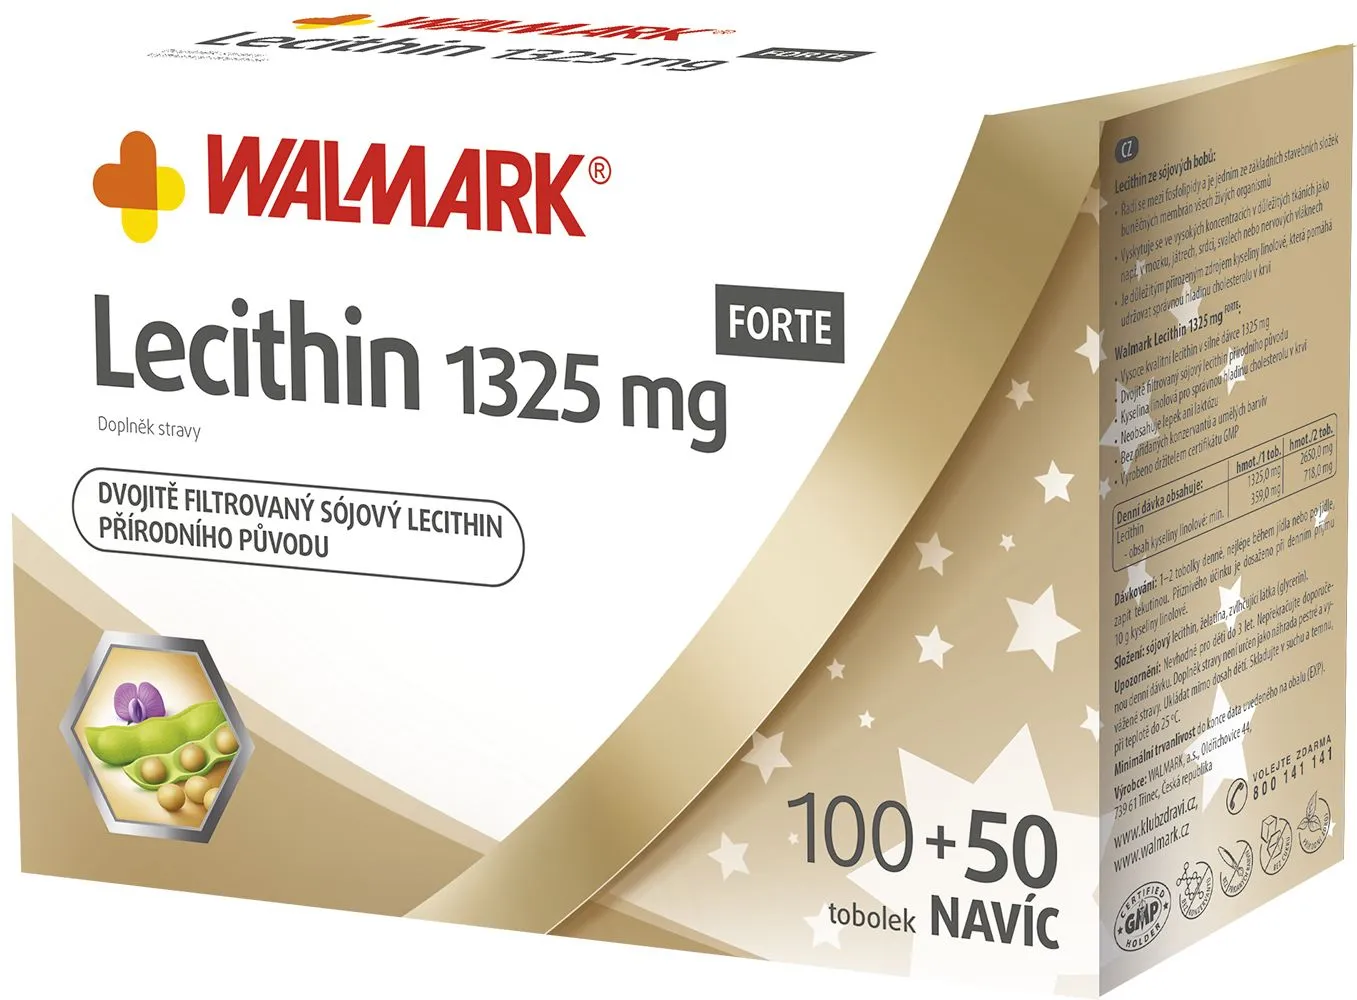 Walmark Lecithin Forte 1325 mg 100+50 tobolek Vánoce 2018